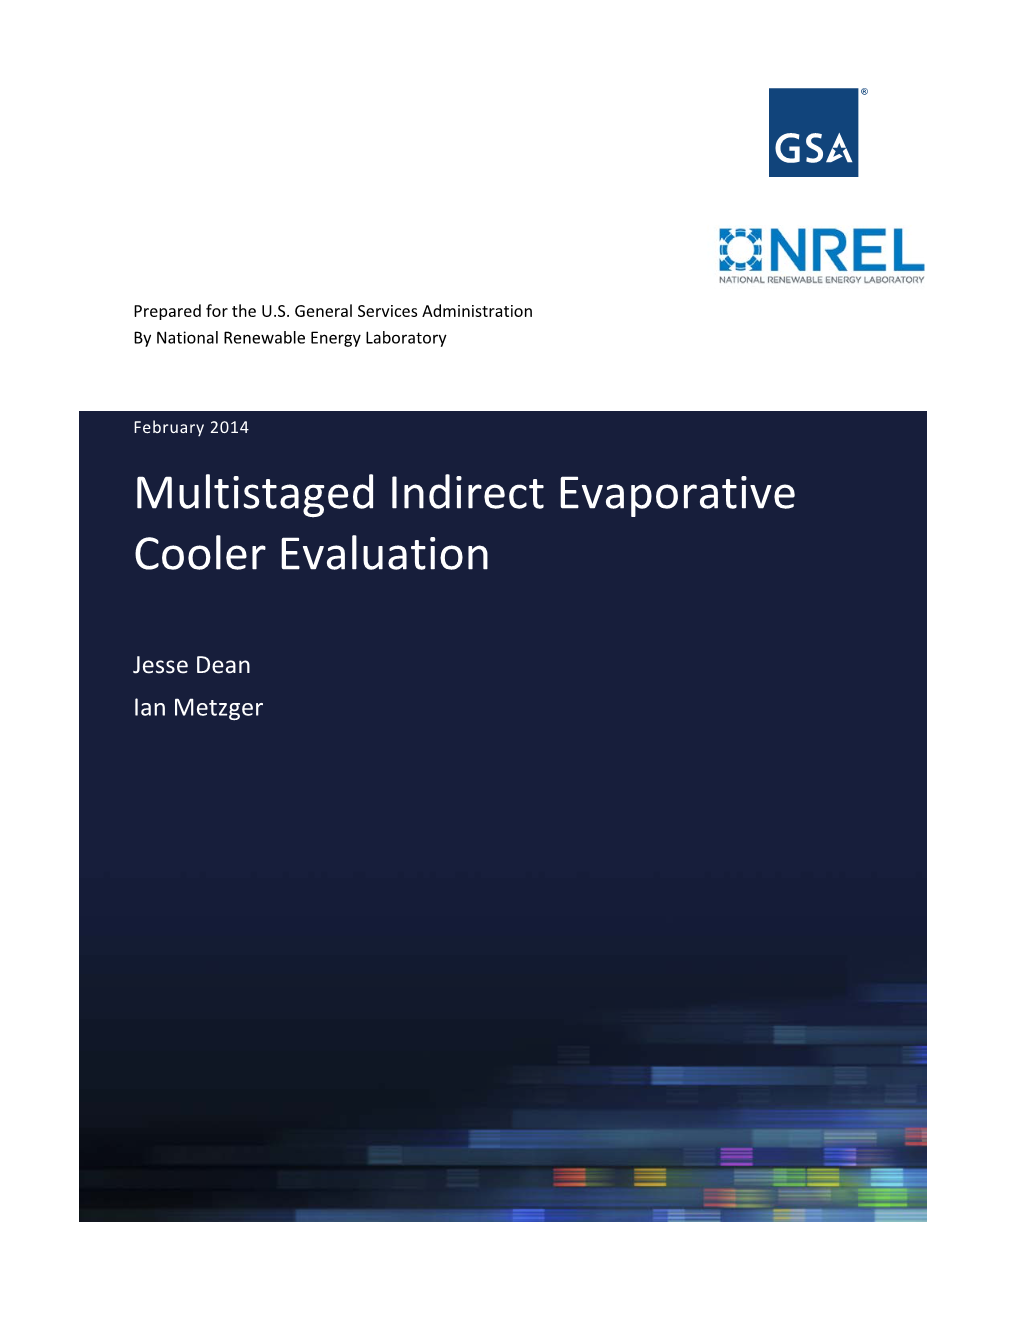 Multistaged Indirect Evaporative Cooler Evaluation